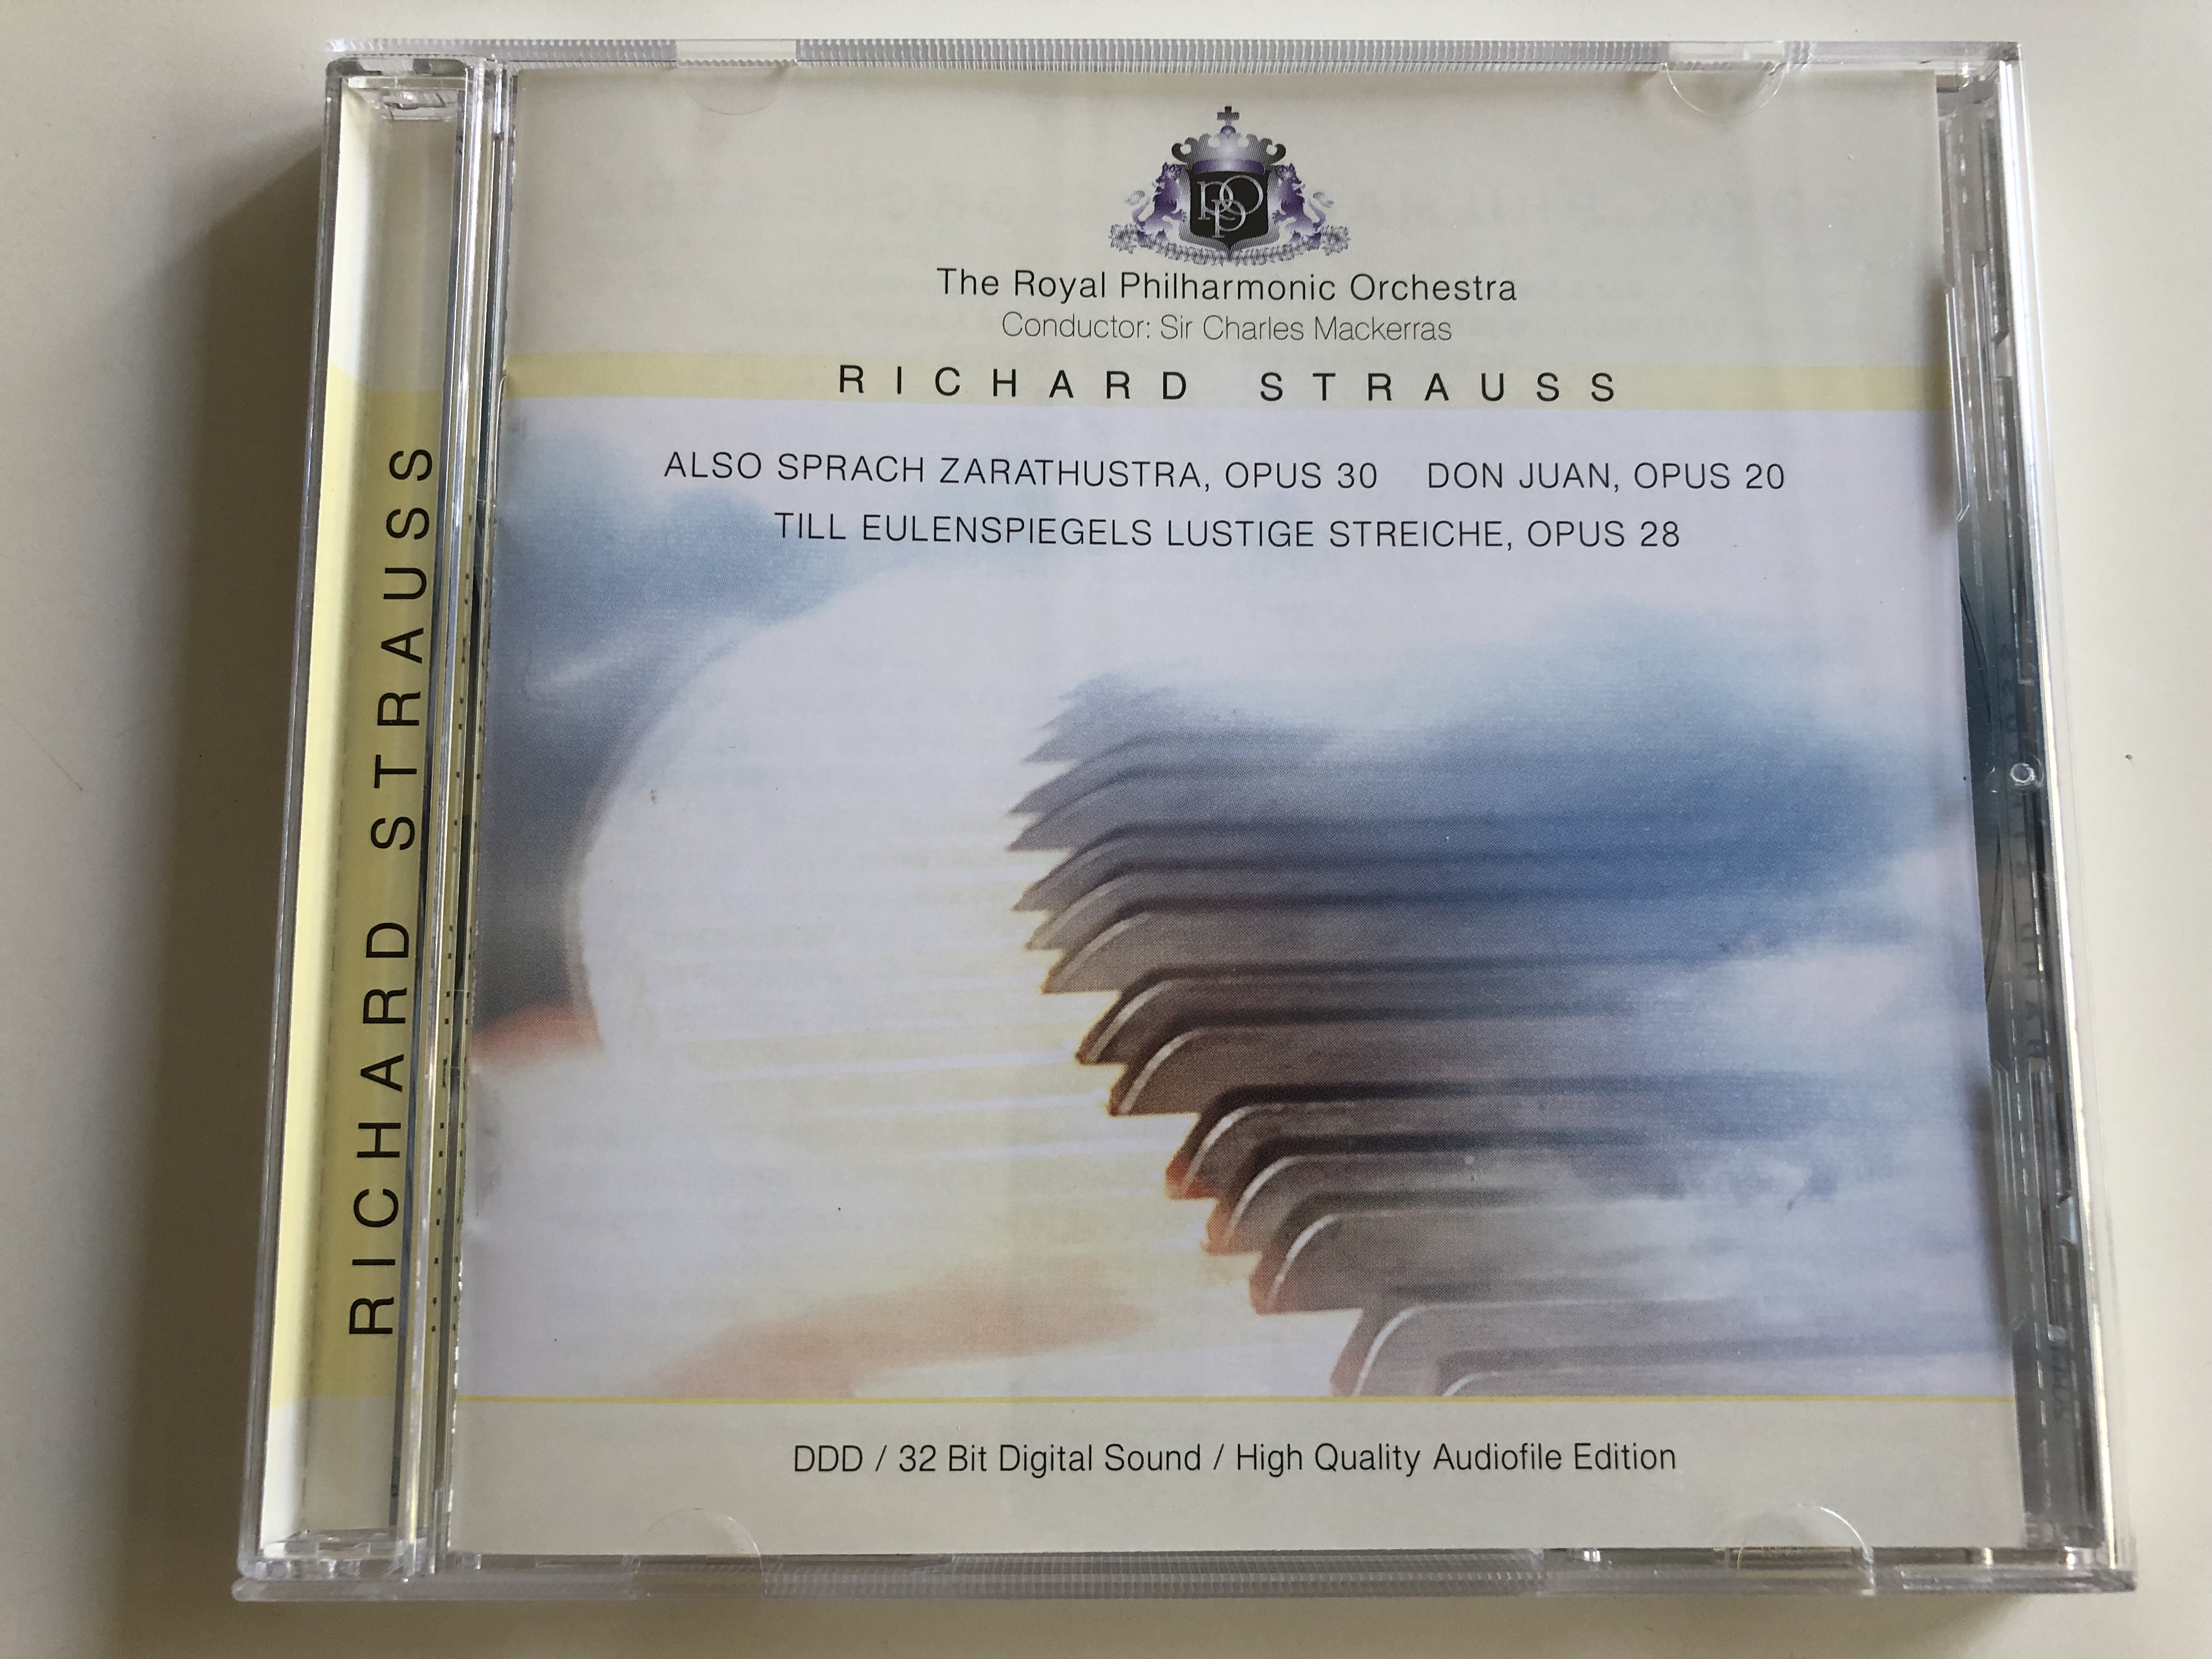 -richard-strauss-also-sprach-zarathustra-opus-30-don-juan-opus-20-till-eulenspiegels-lustige-streiche-op.-28-the-royal-philharmonic-orchestra-conductor-sir-charles-mackerras-audio-cd-1993-204470-201-1-.jpg